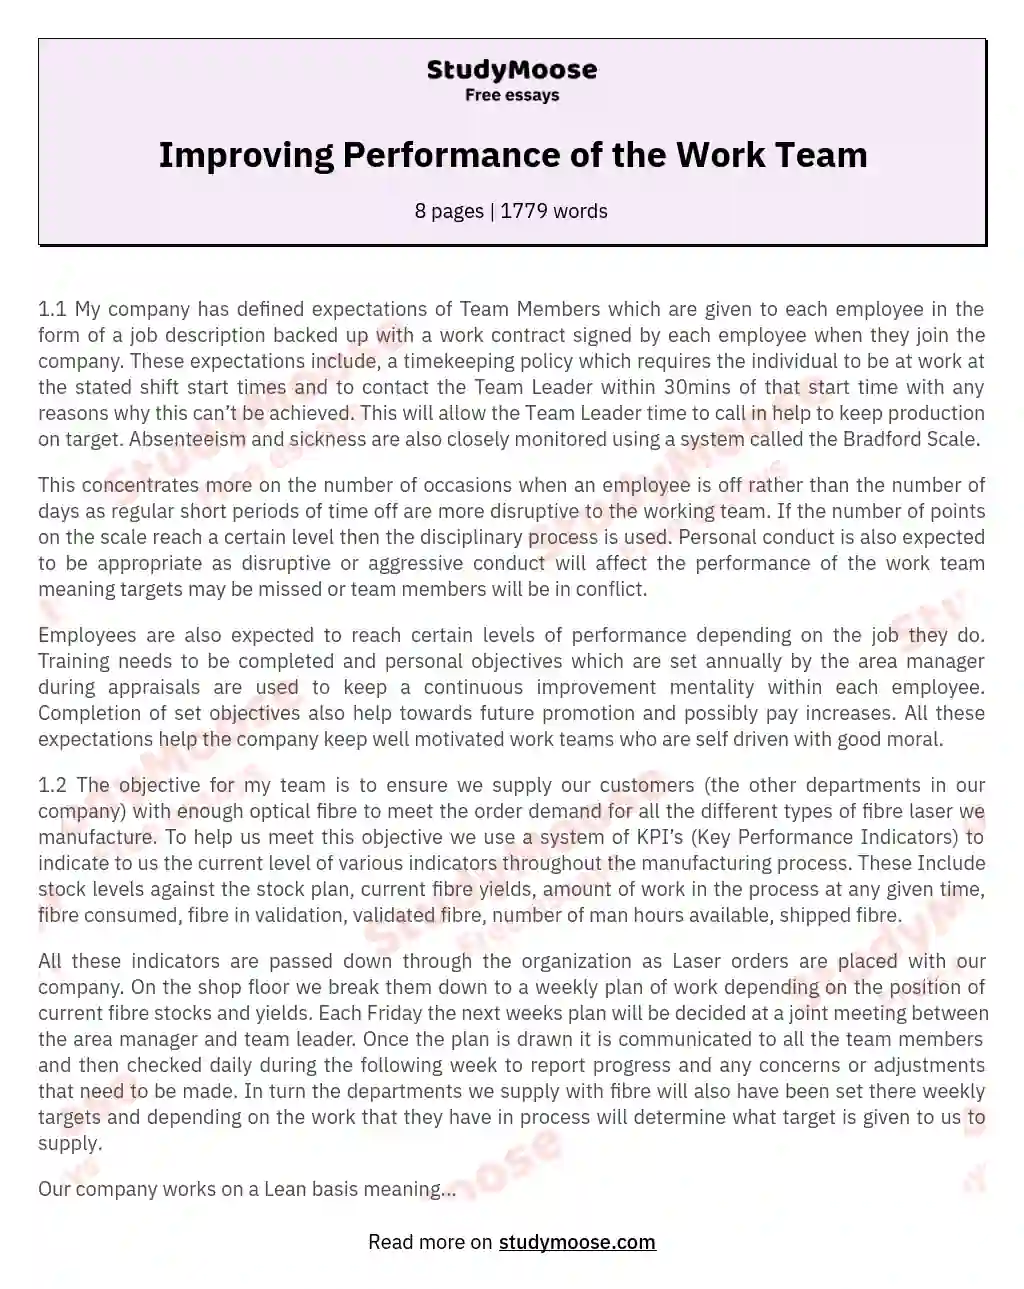 Improving Performance of the Work Team essay